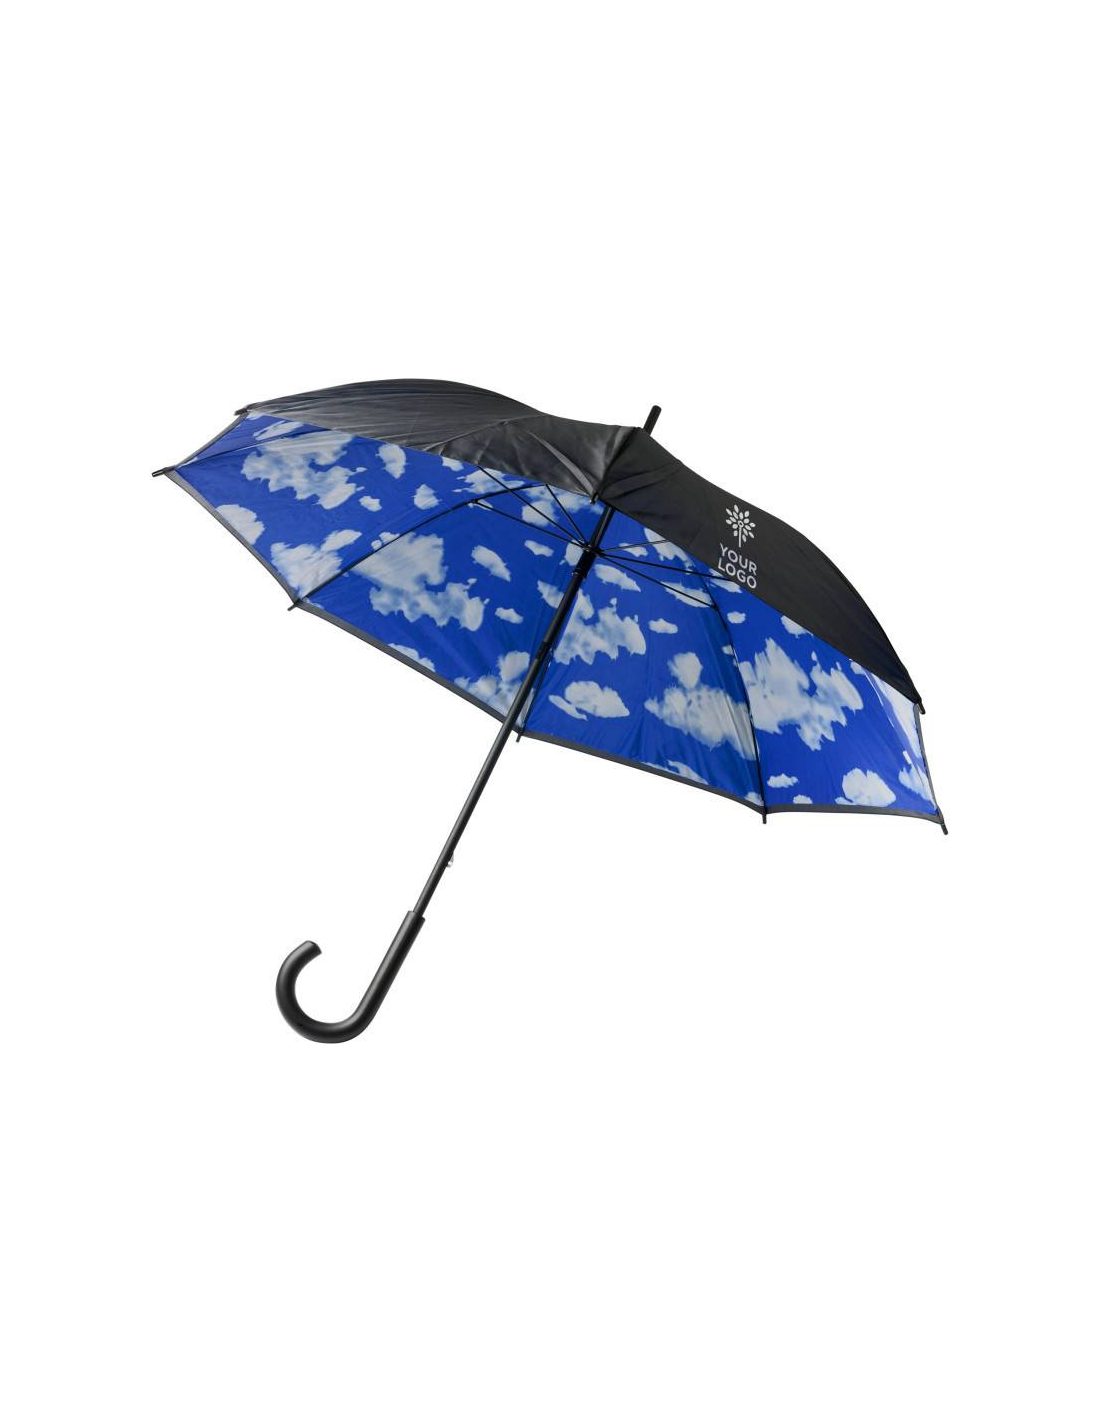 legal posterior alarma Paraguas con nubes | Paraguas con gotas de lluvia